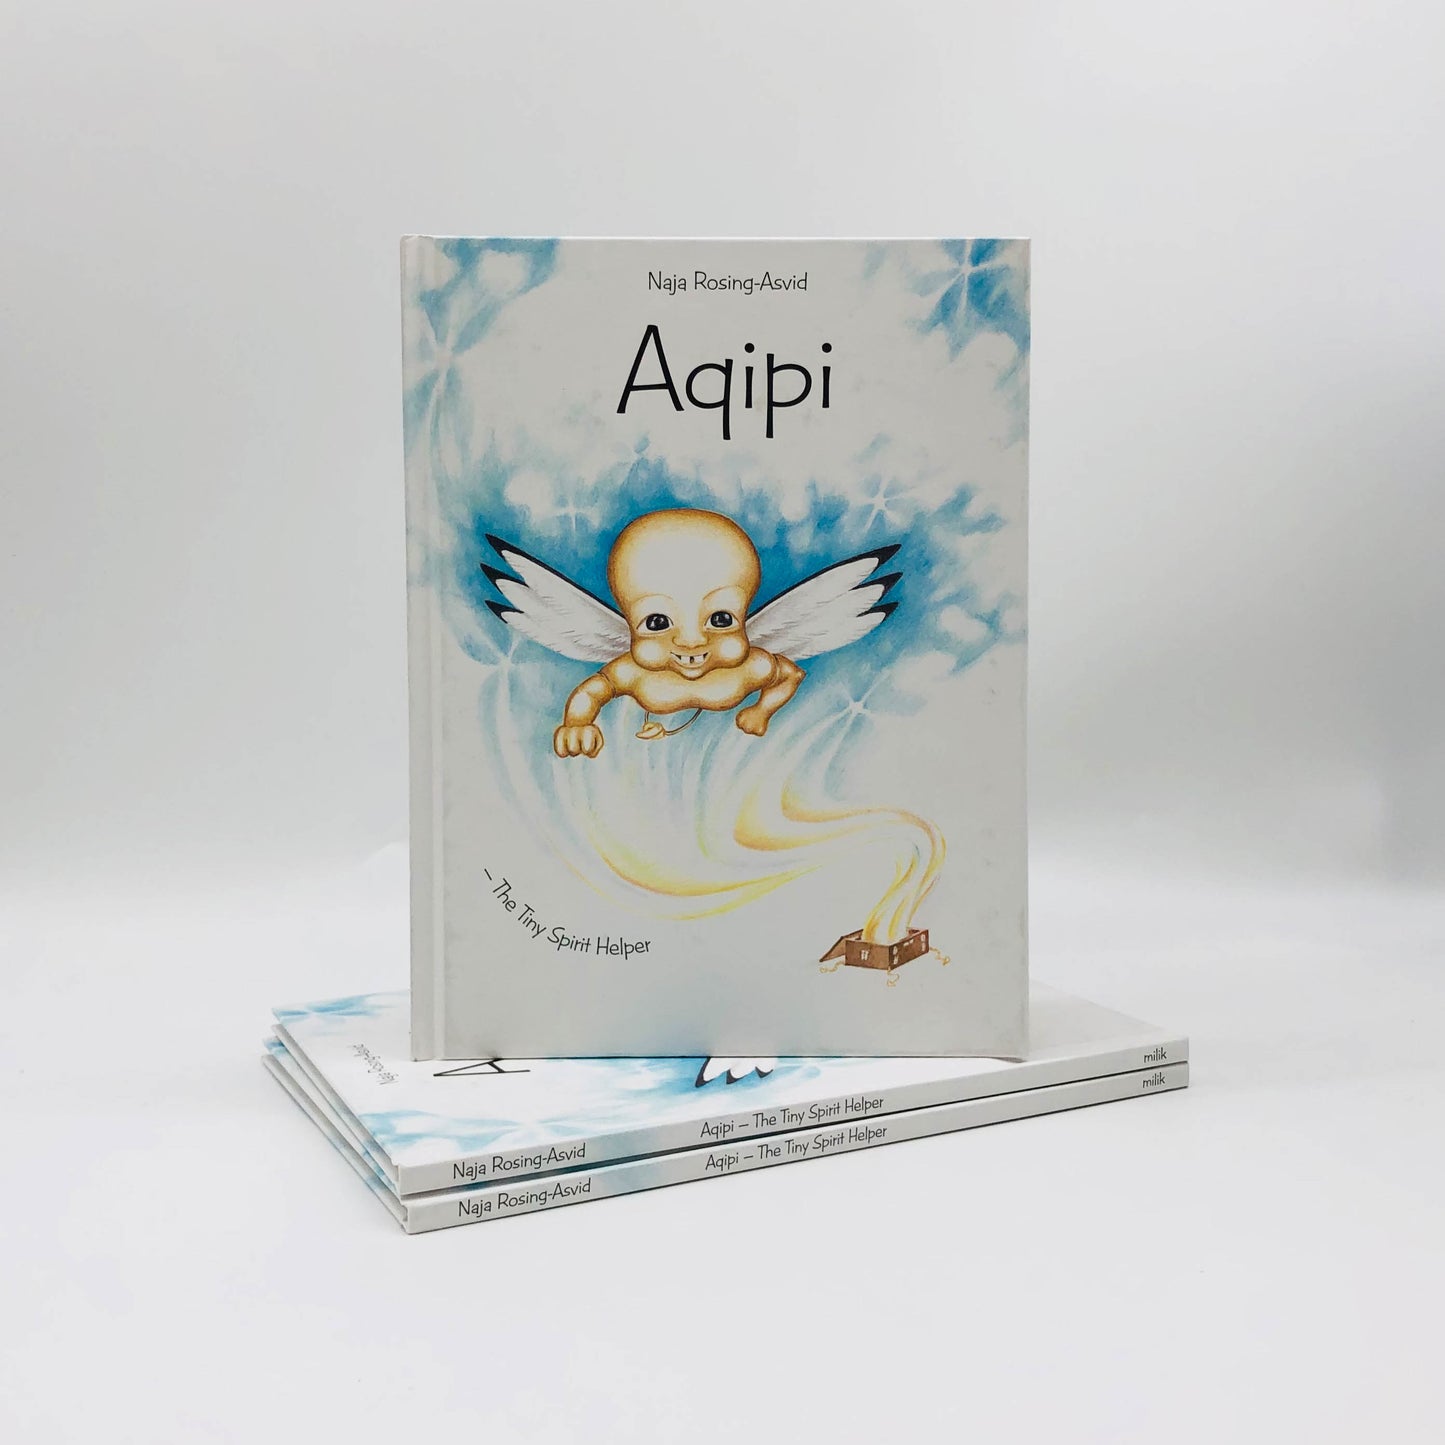 Aqipi. The Tiny Spirit Helper  by Naja Rosing-Asvid